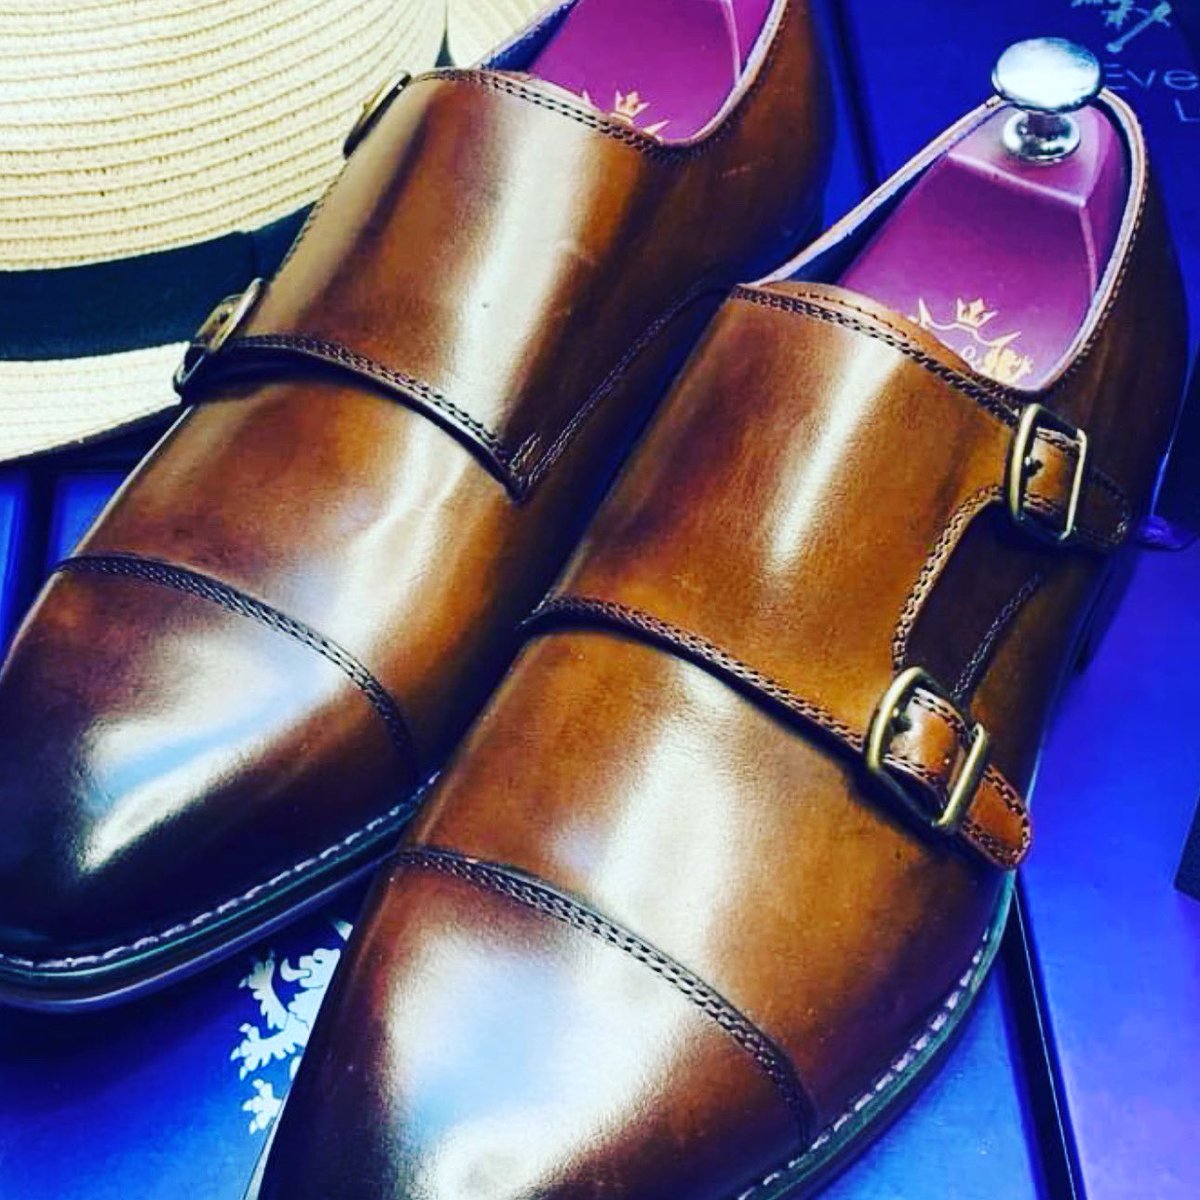 Time to step up your shoe game?
bit.ly/3DekHBK

#HandmadeShoes #Designyourown #Brogues #ChelseaBoots #MonkStrapBoots #WeddingShoesForMen #ComfortableShoesForMen #ItalianLeather #Evesandgray #Chukkaboots #wingtips #oxfordshoes